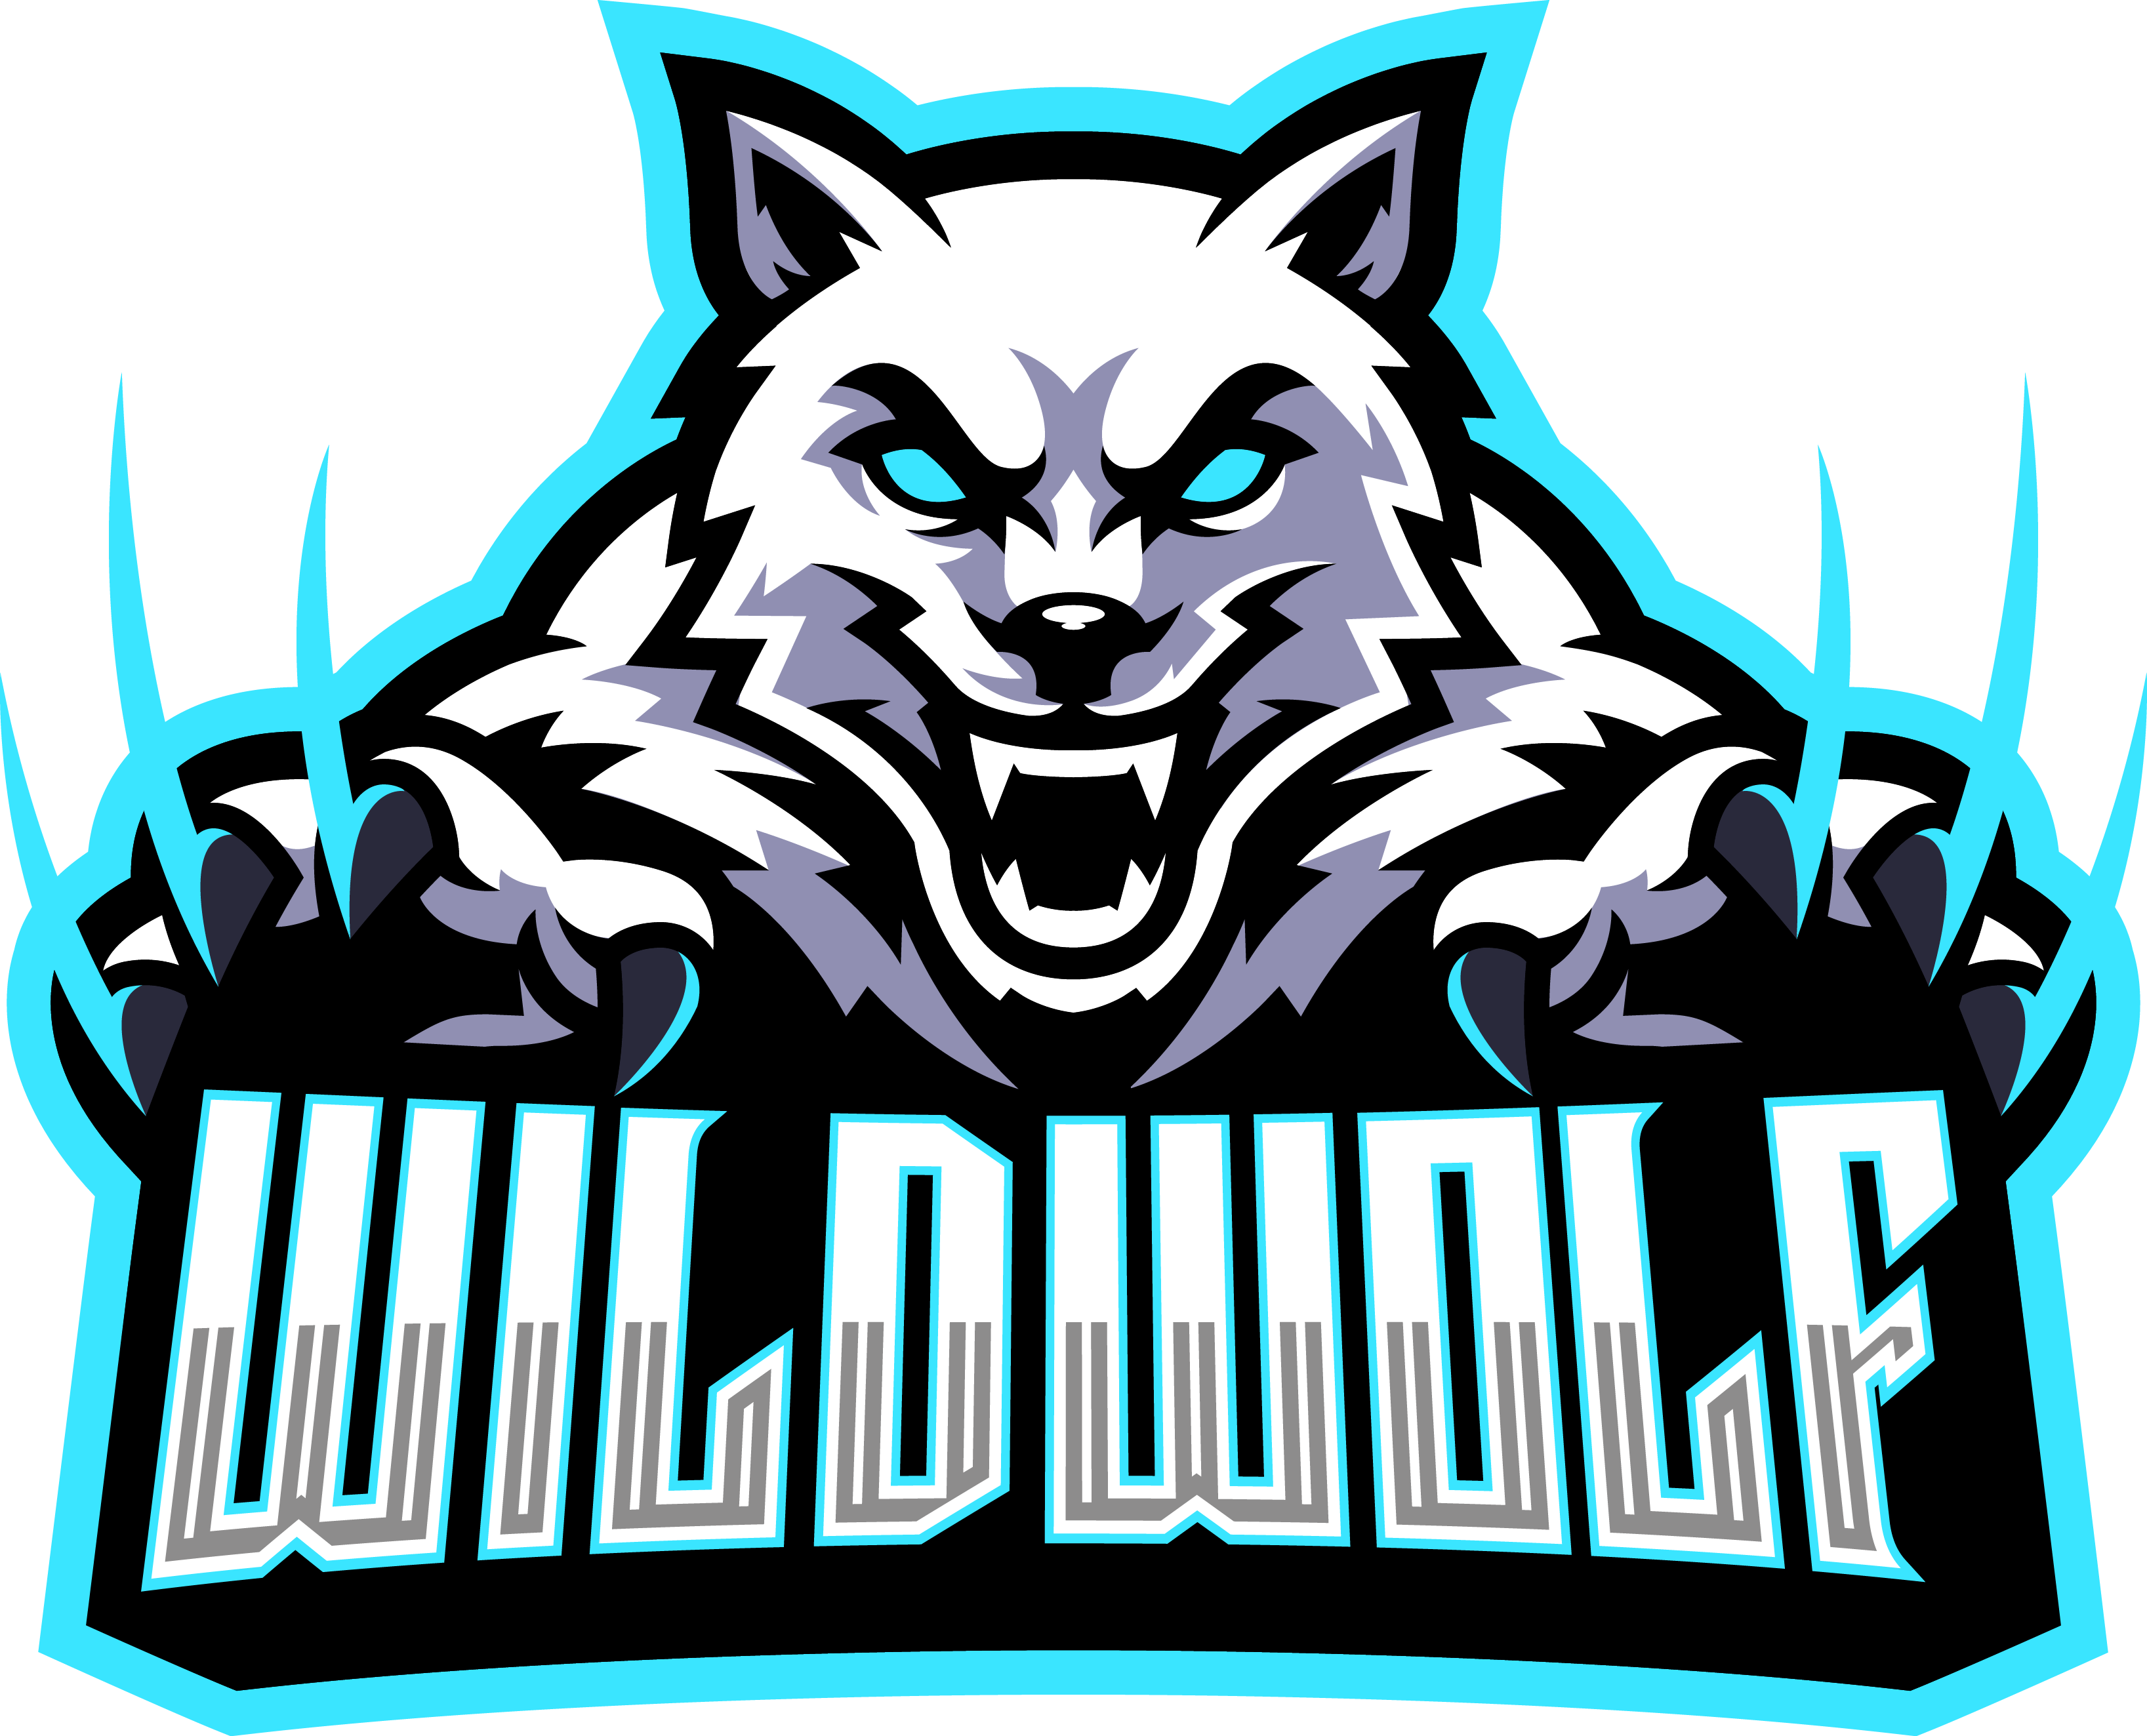 Wild wolf esport mascot logo design By Visink | TheHungryJPEG.com